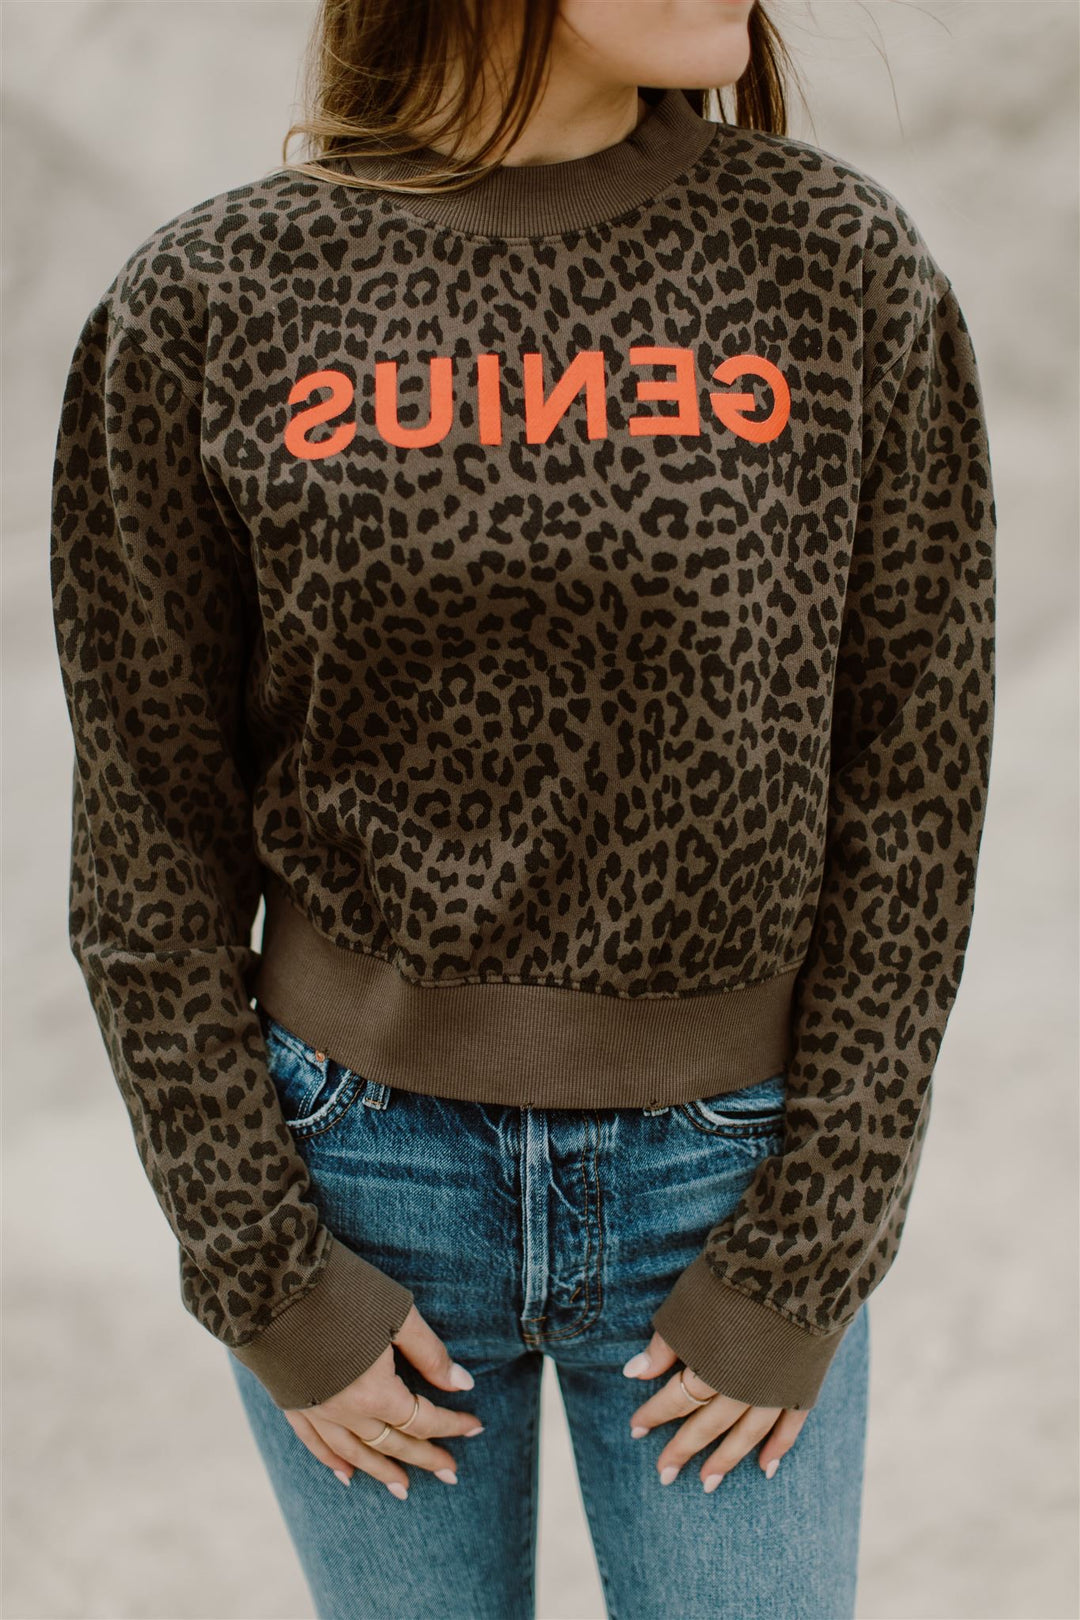 Blond Genius - Leopard 'Genius' Sweatshirt